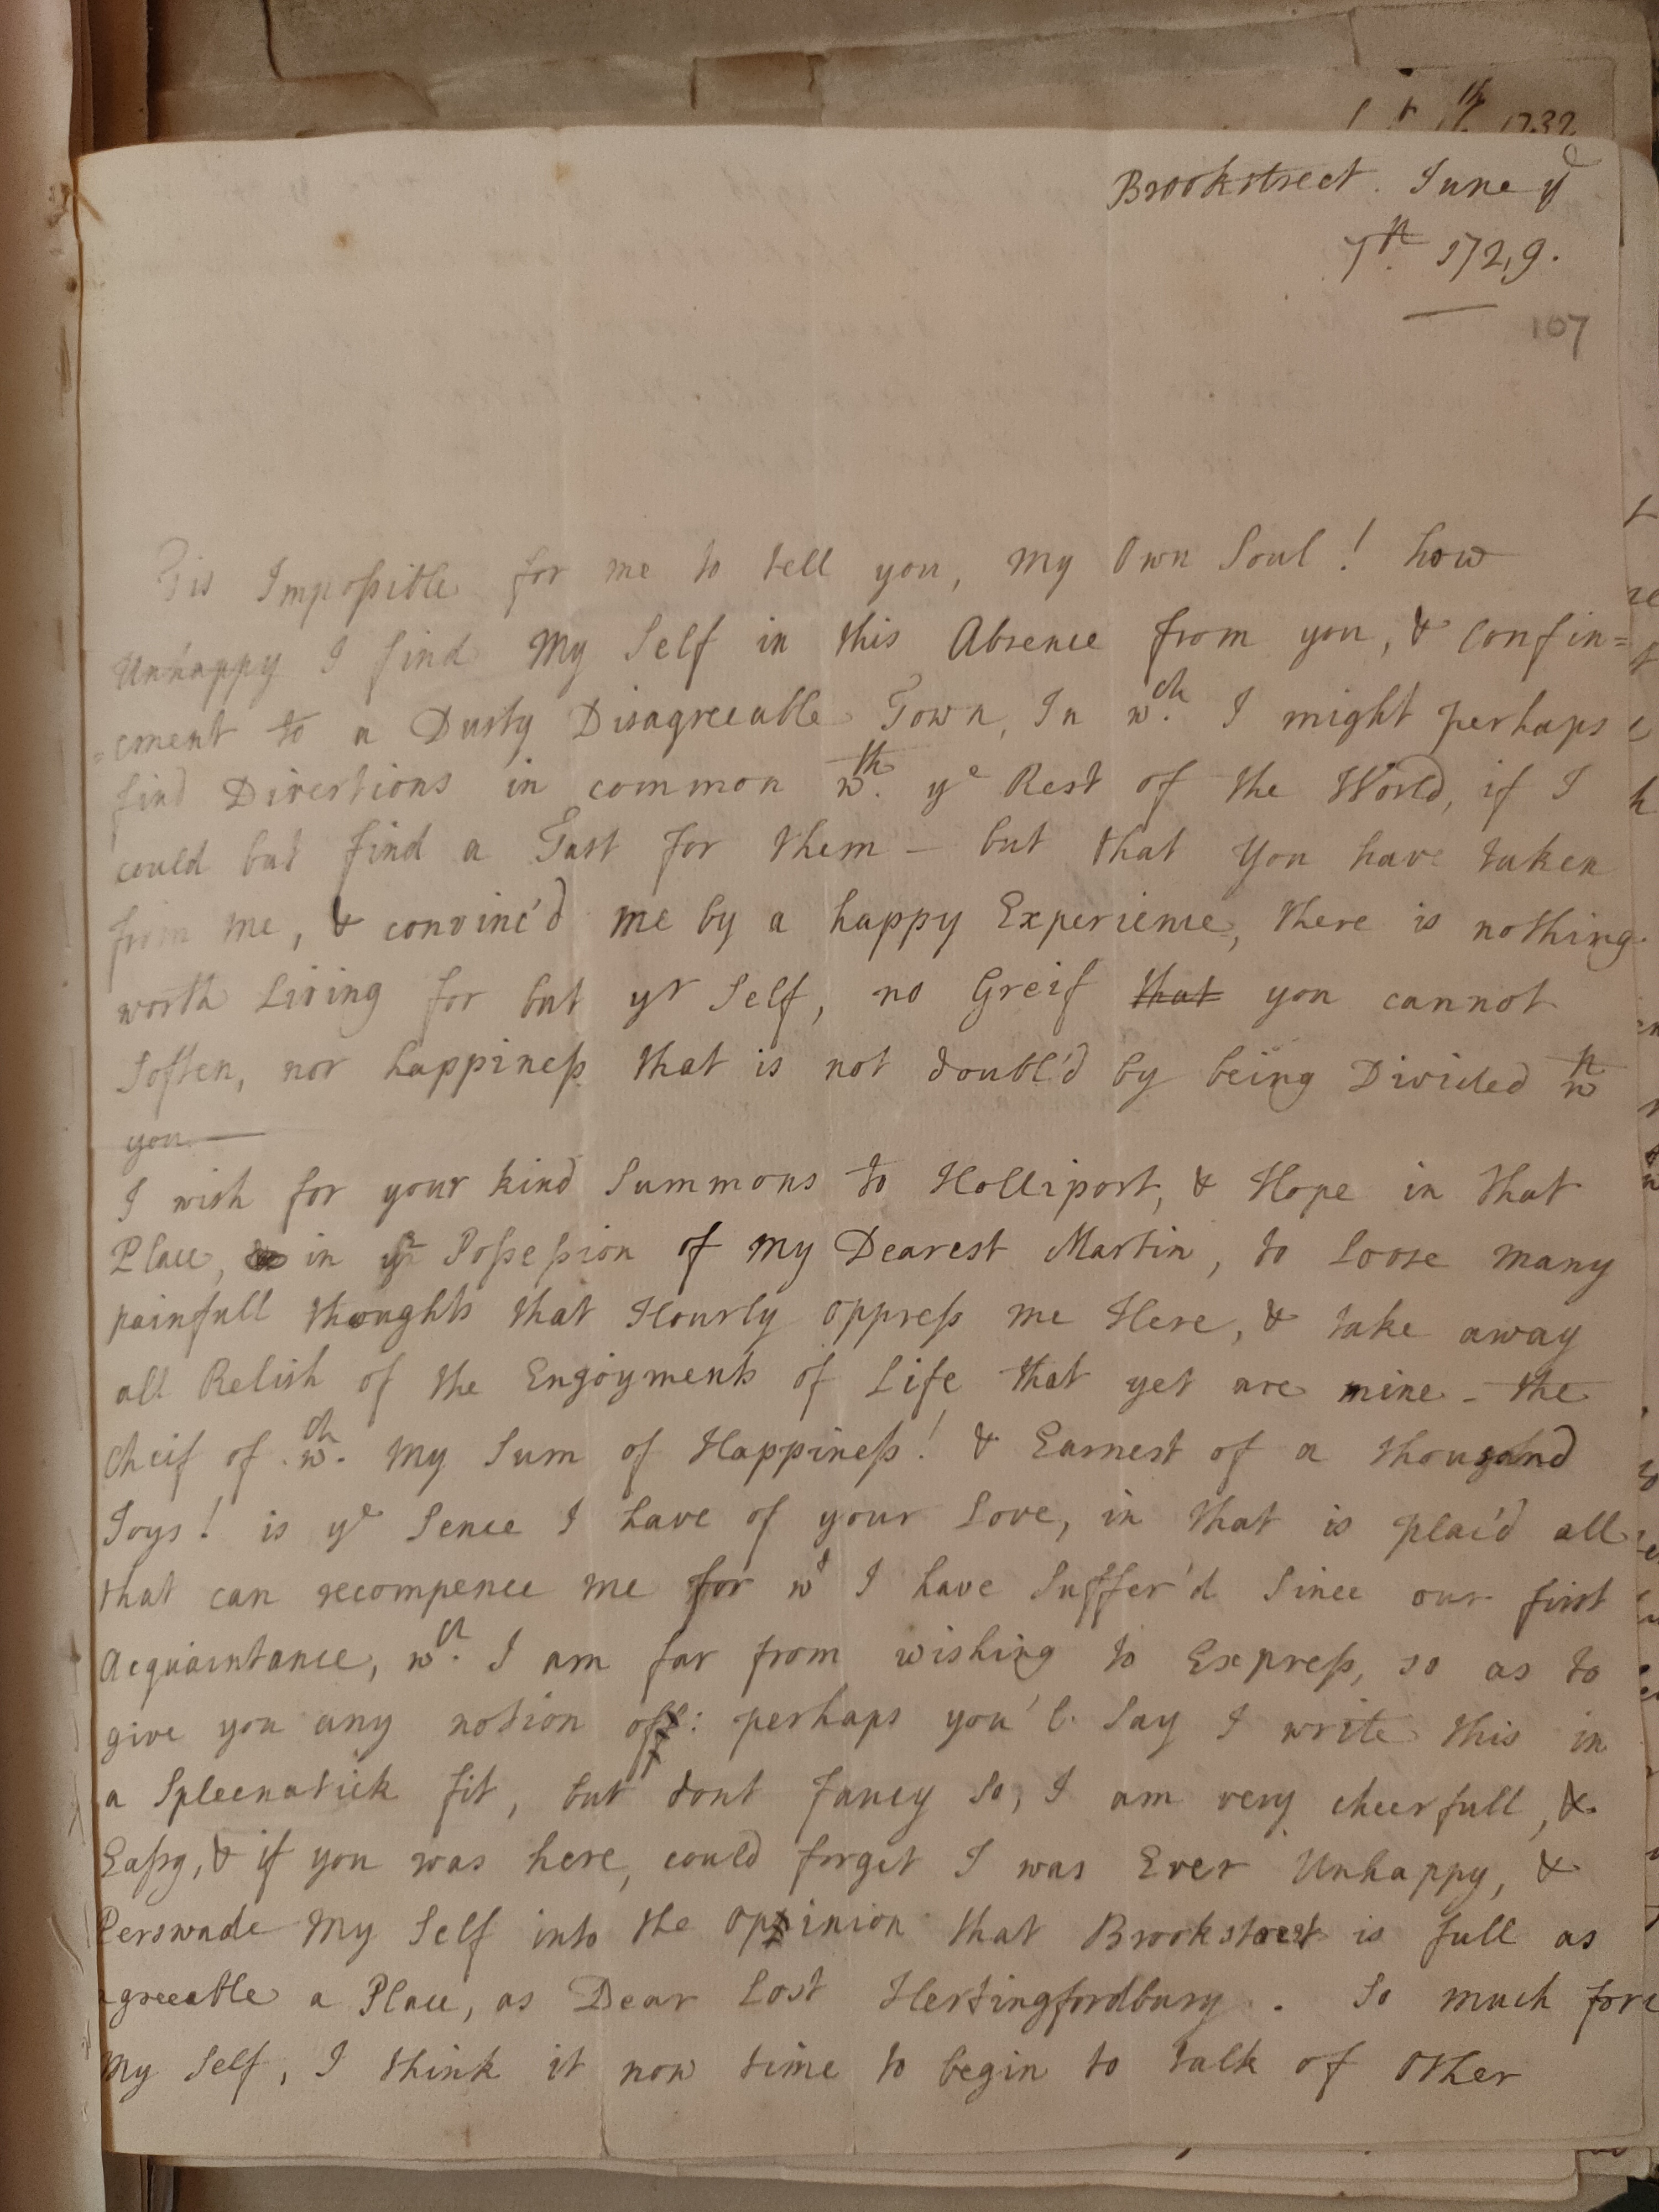 Image #1 of letter: Judith Madan to Martin Madan, 7 June 1729